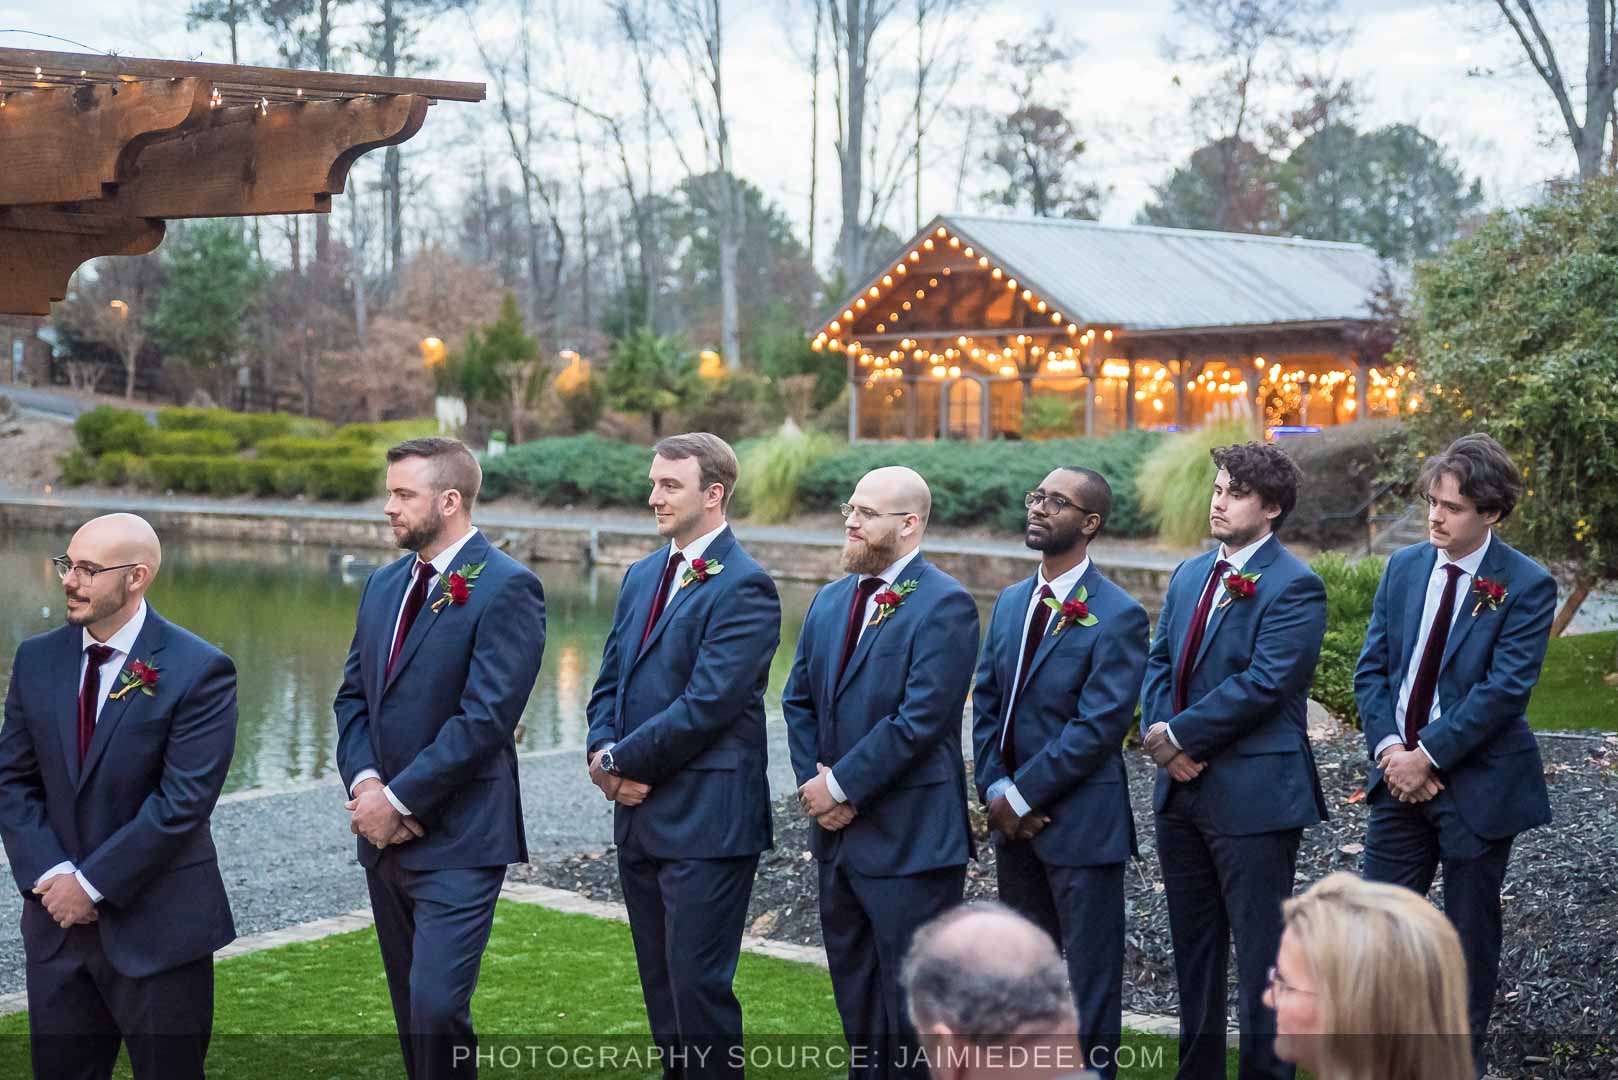 Rocky's Lake Estate Wedding Venue - Wedding ceremony - groomsmen standing and watching the ceremony